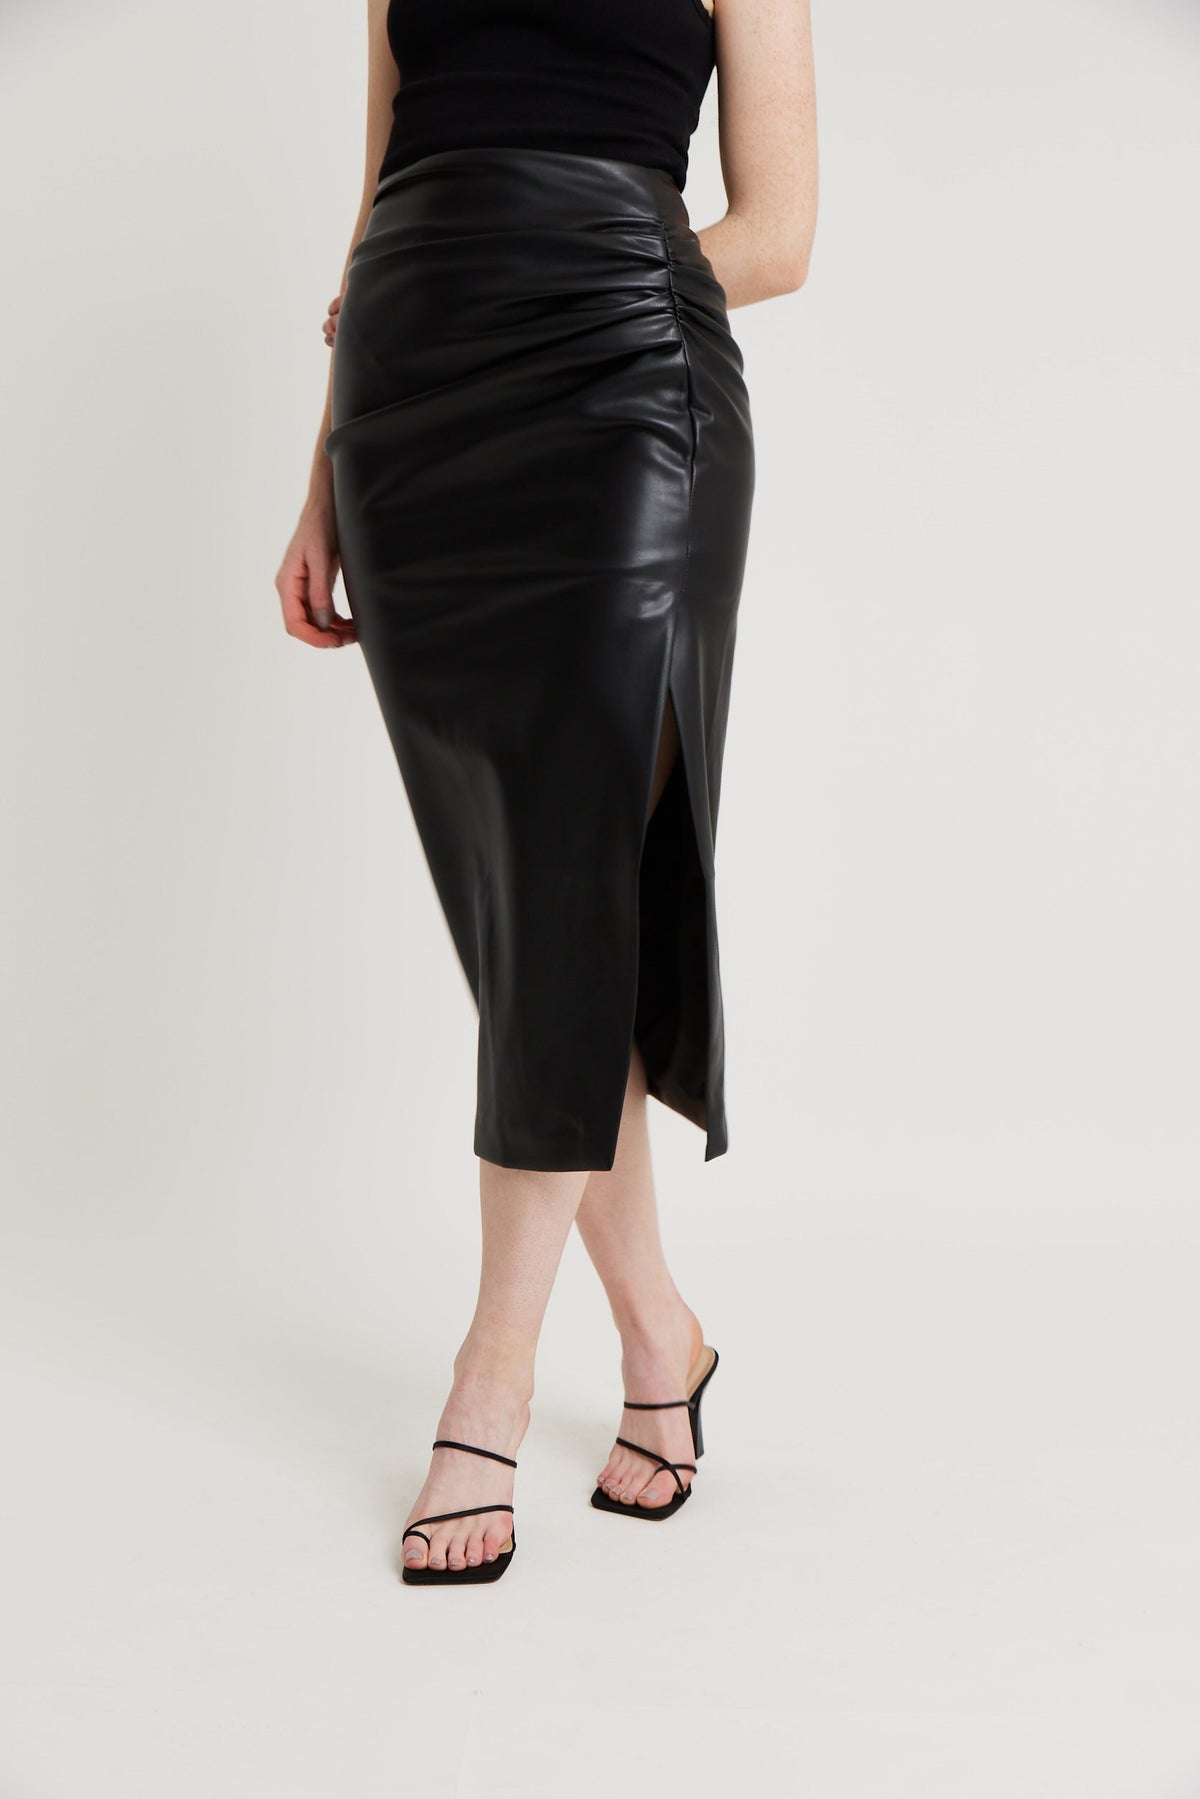 Ruched Leather Midi Skirt - Black